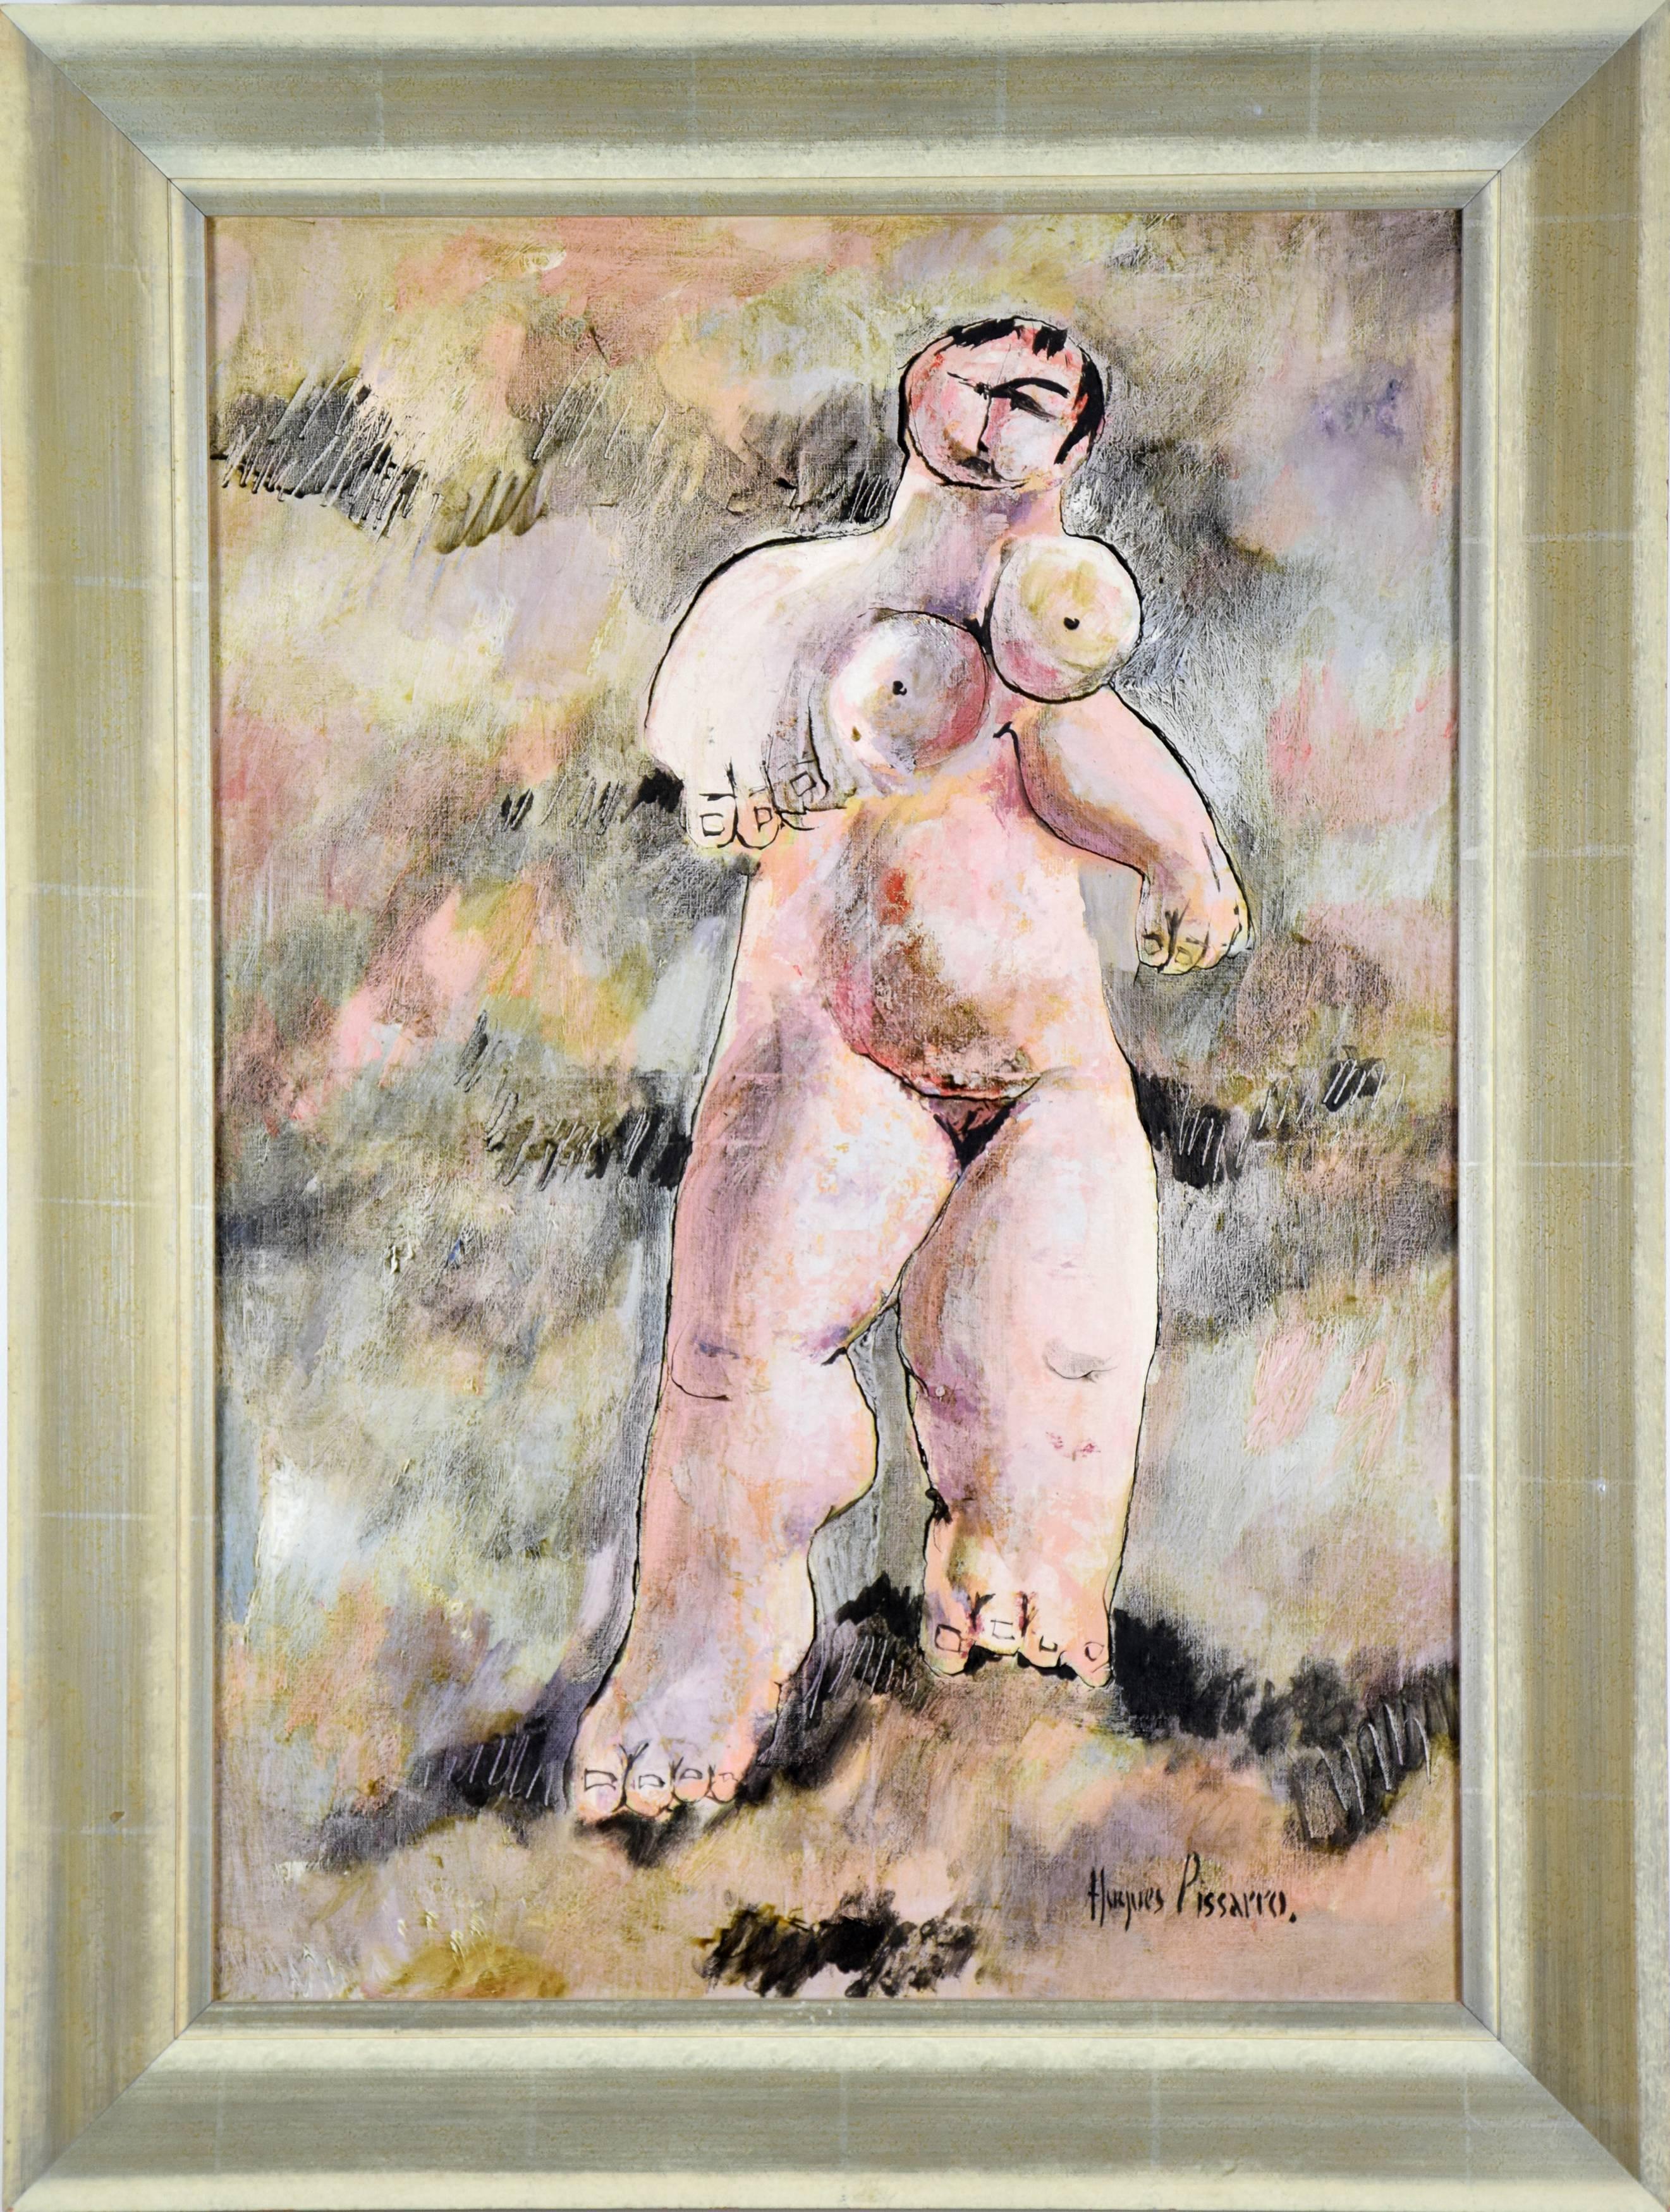 Peinture Nue Debout de HUGUES PISSARRO - Peinture de nu, Figure humaine, Huile sur toile, Art - Painting de Hughes Claude Pissarro